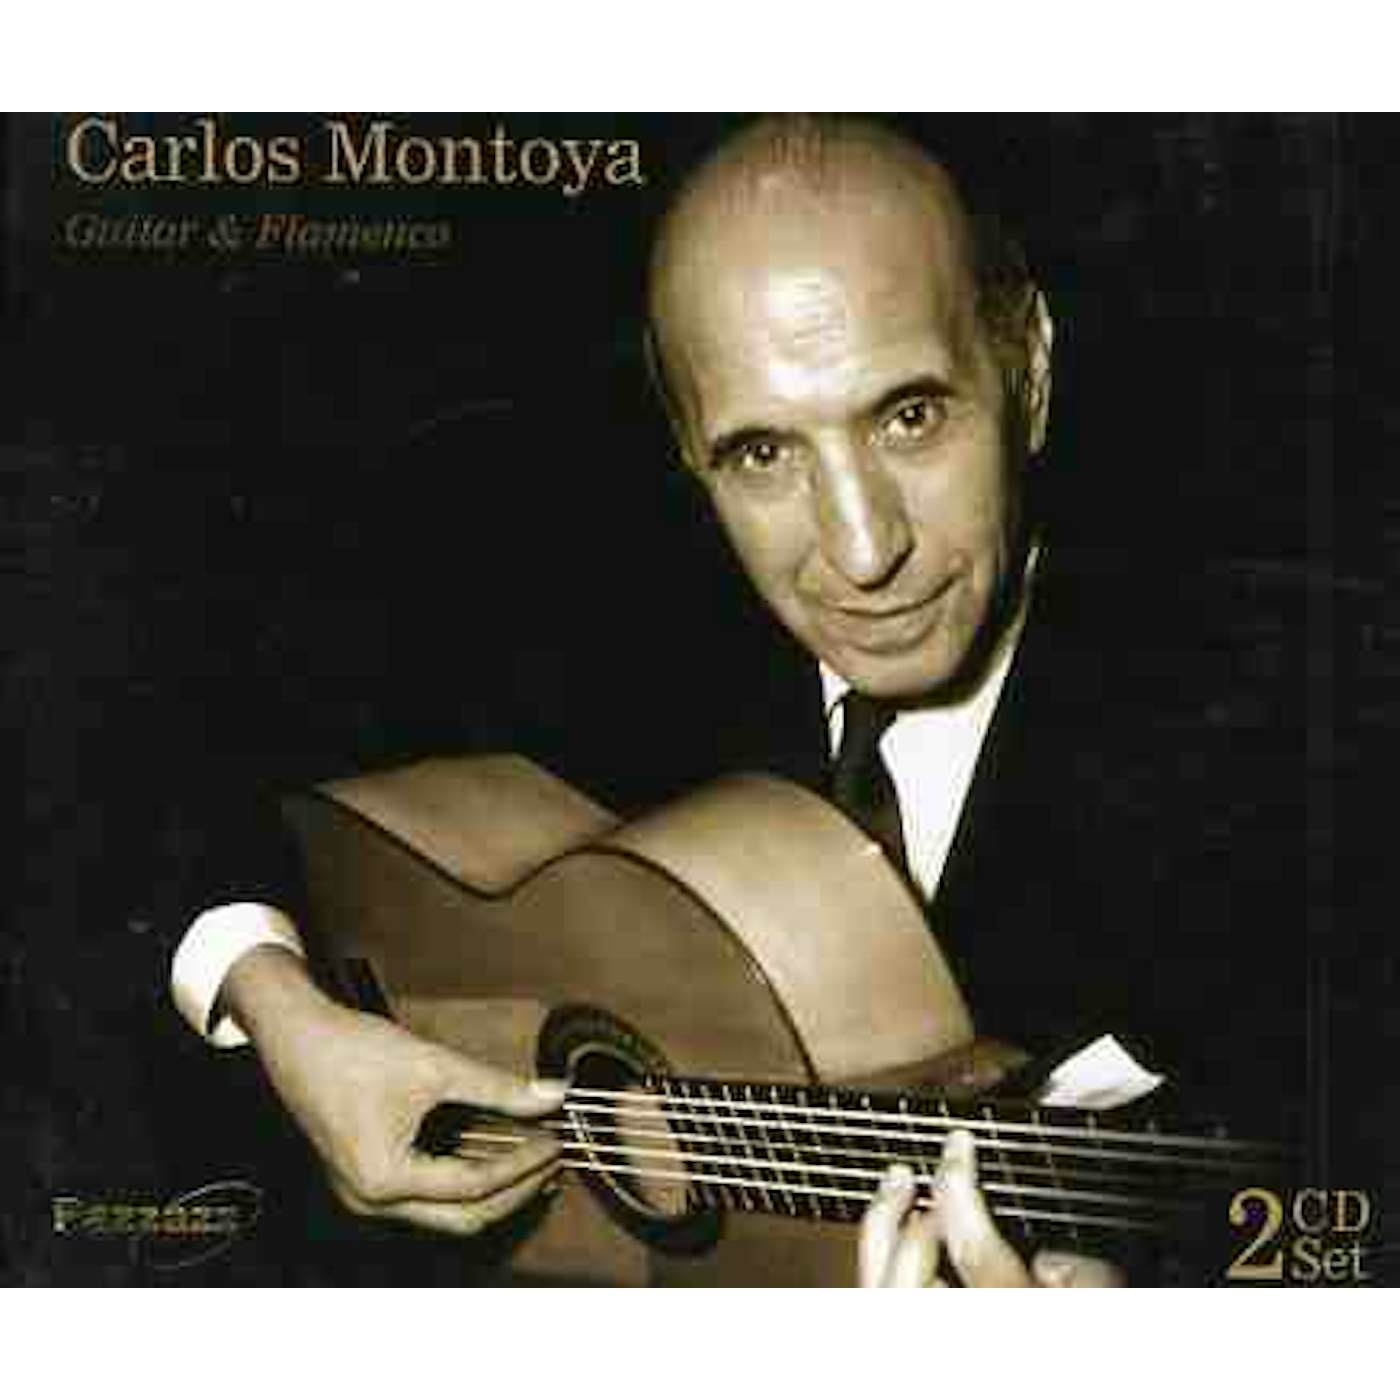 Carlos Montoya GUITAR & FLAMENCO CD